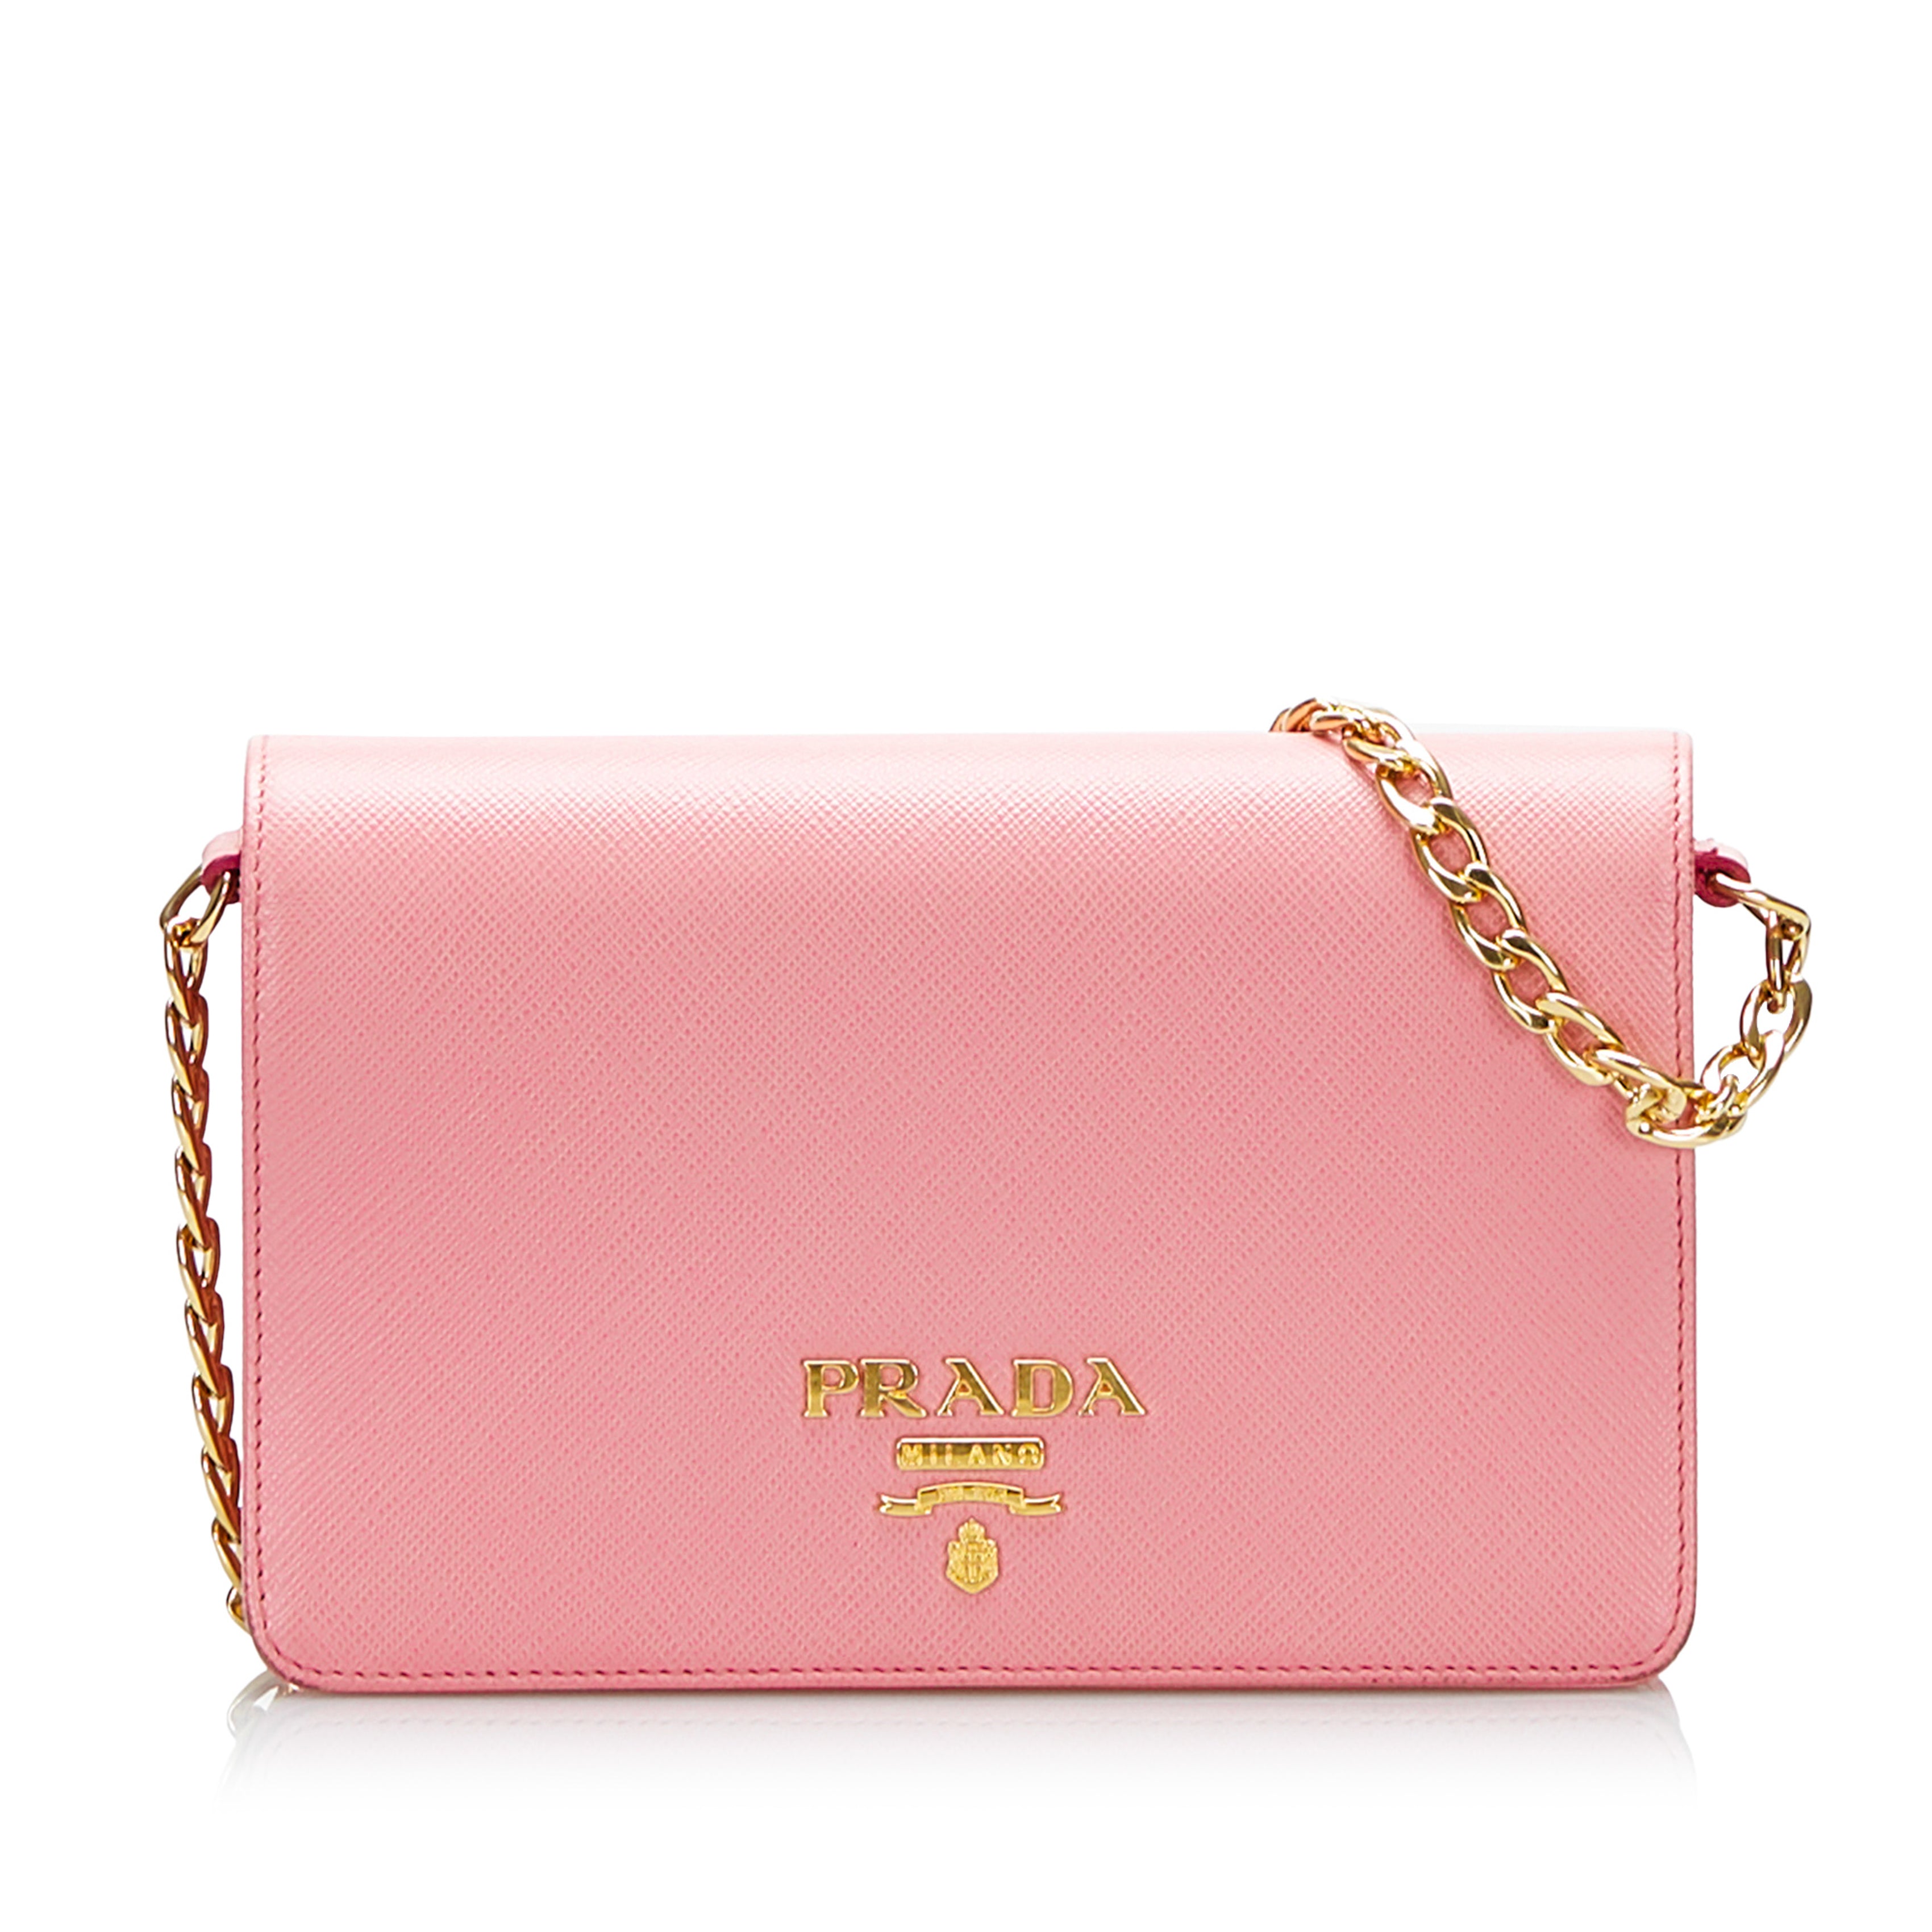 Prada Prada Saffiano Wallet on Chain in Pink - Vault 55